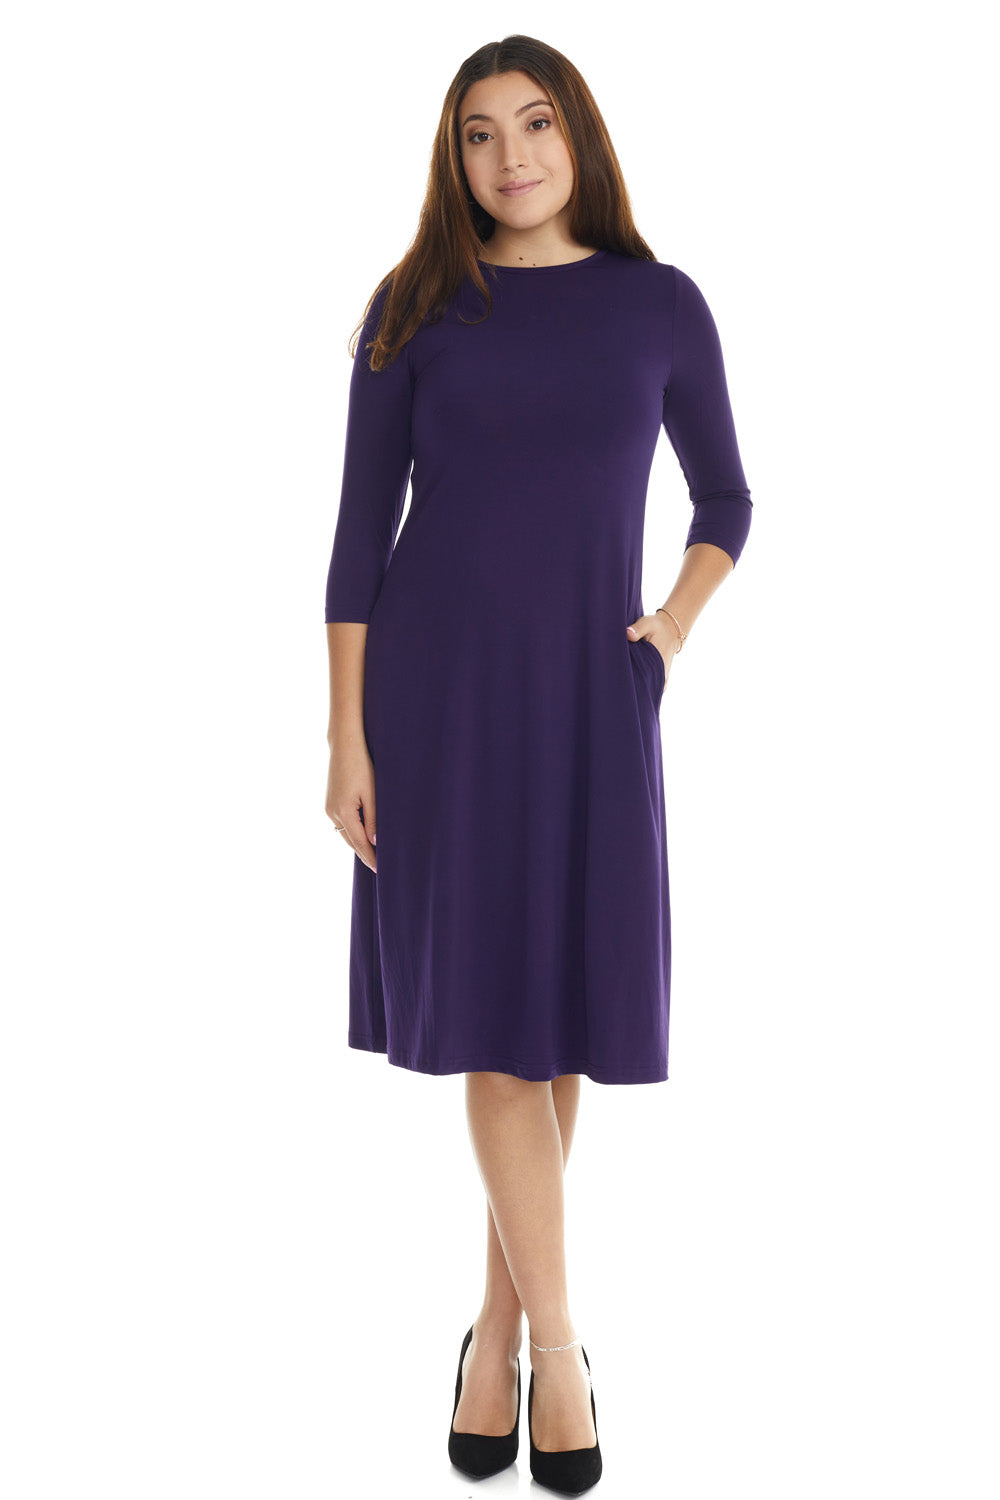 purple flary below knee length 3/4 sleeve crew neck modest tznius a-line dress with pockets